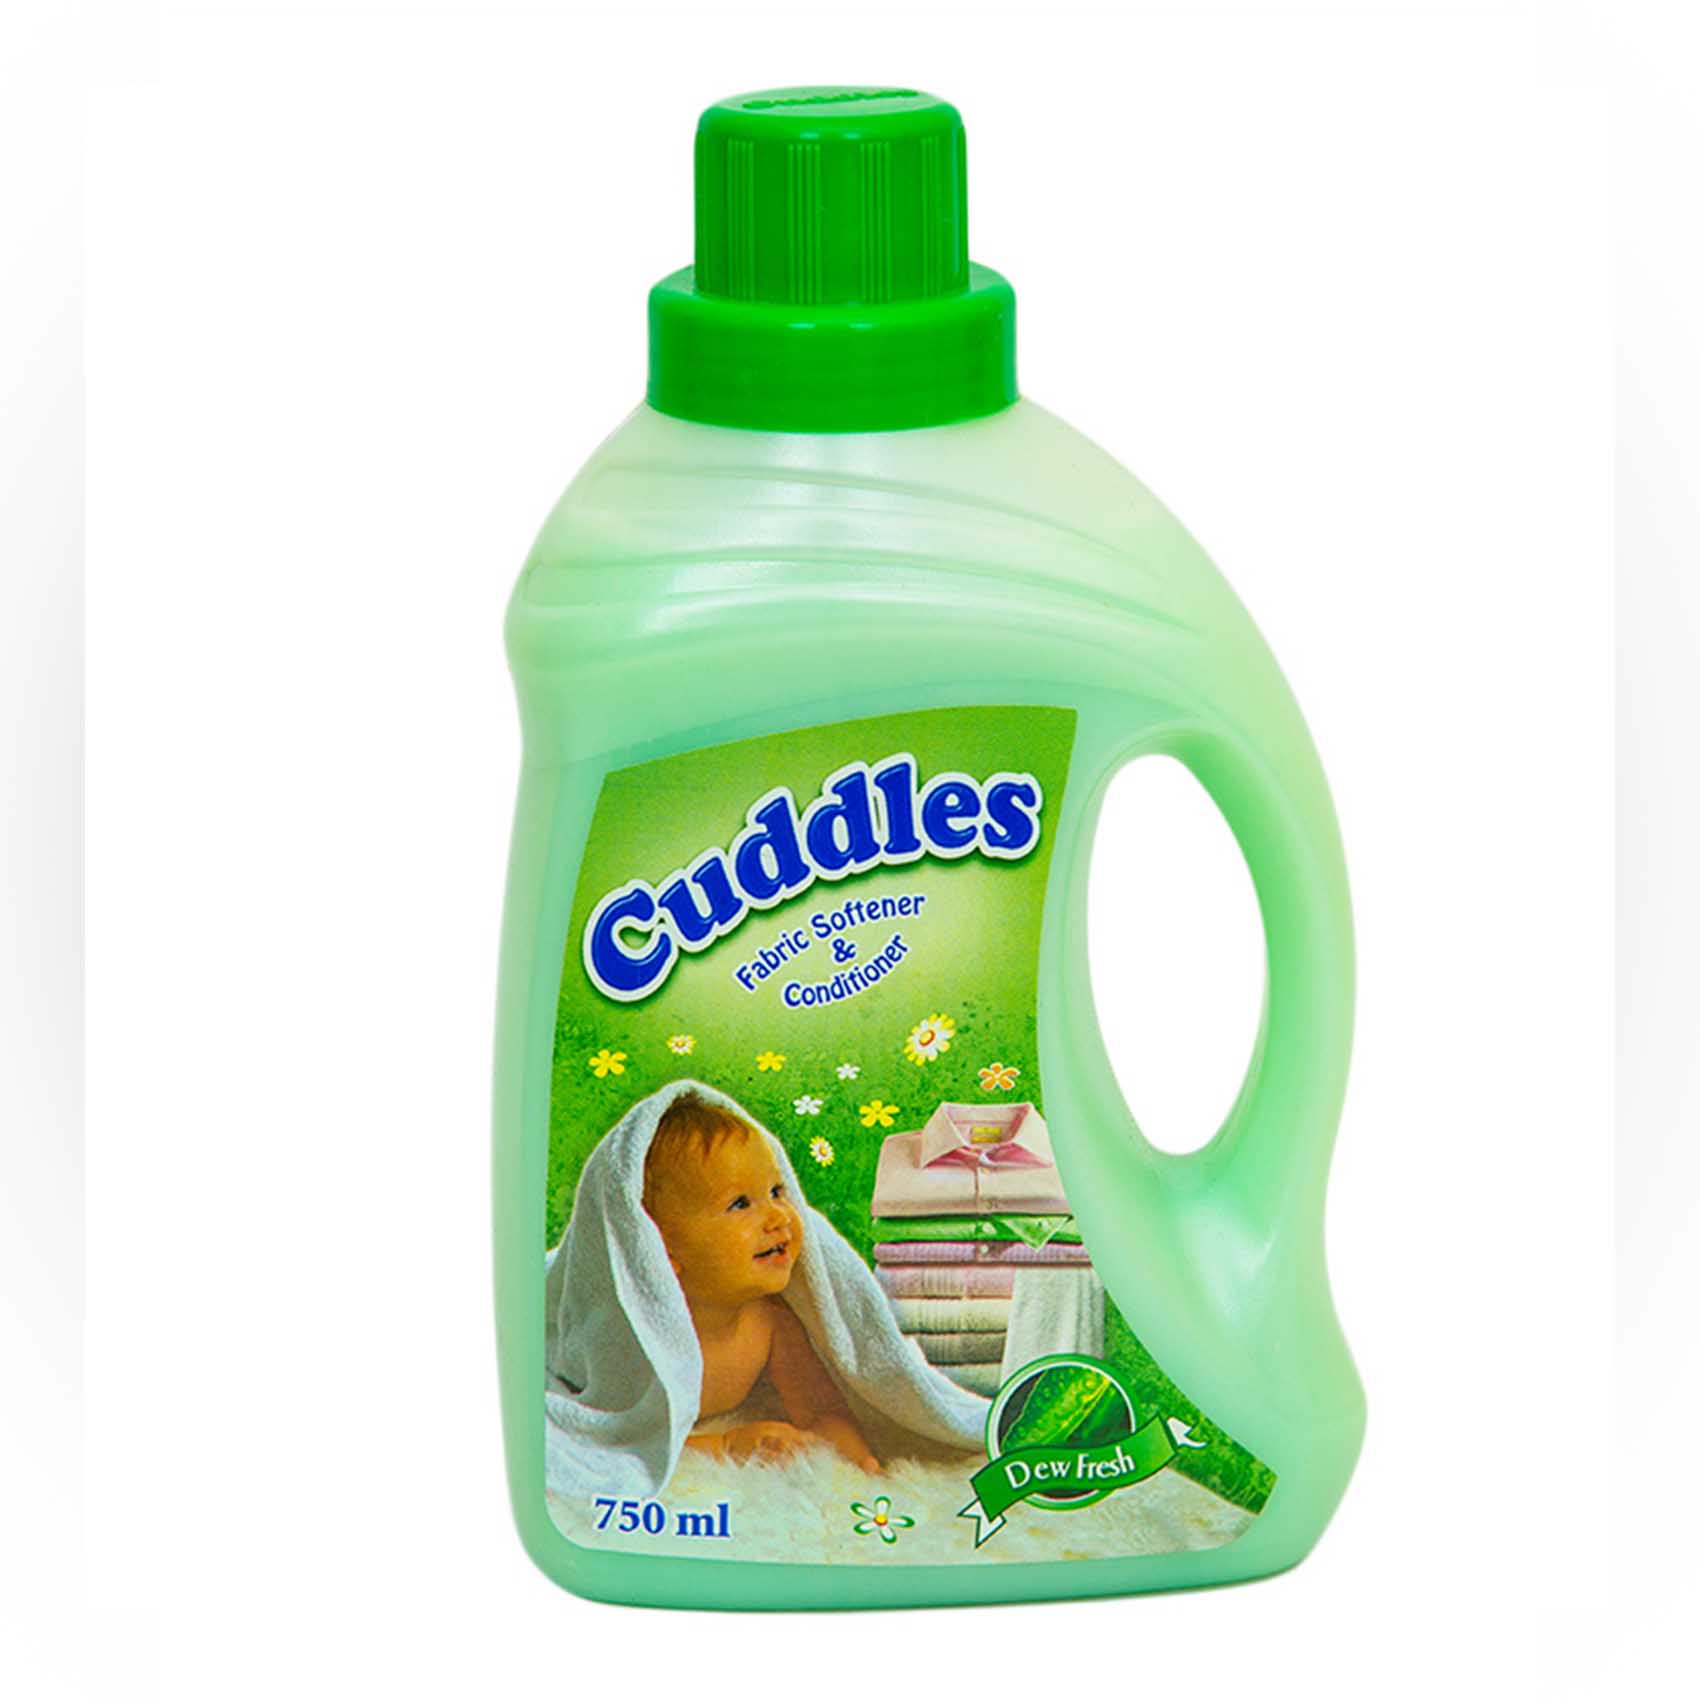 Cuddles Softener Dew Fresh 09 750Ml